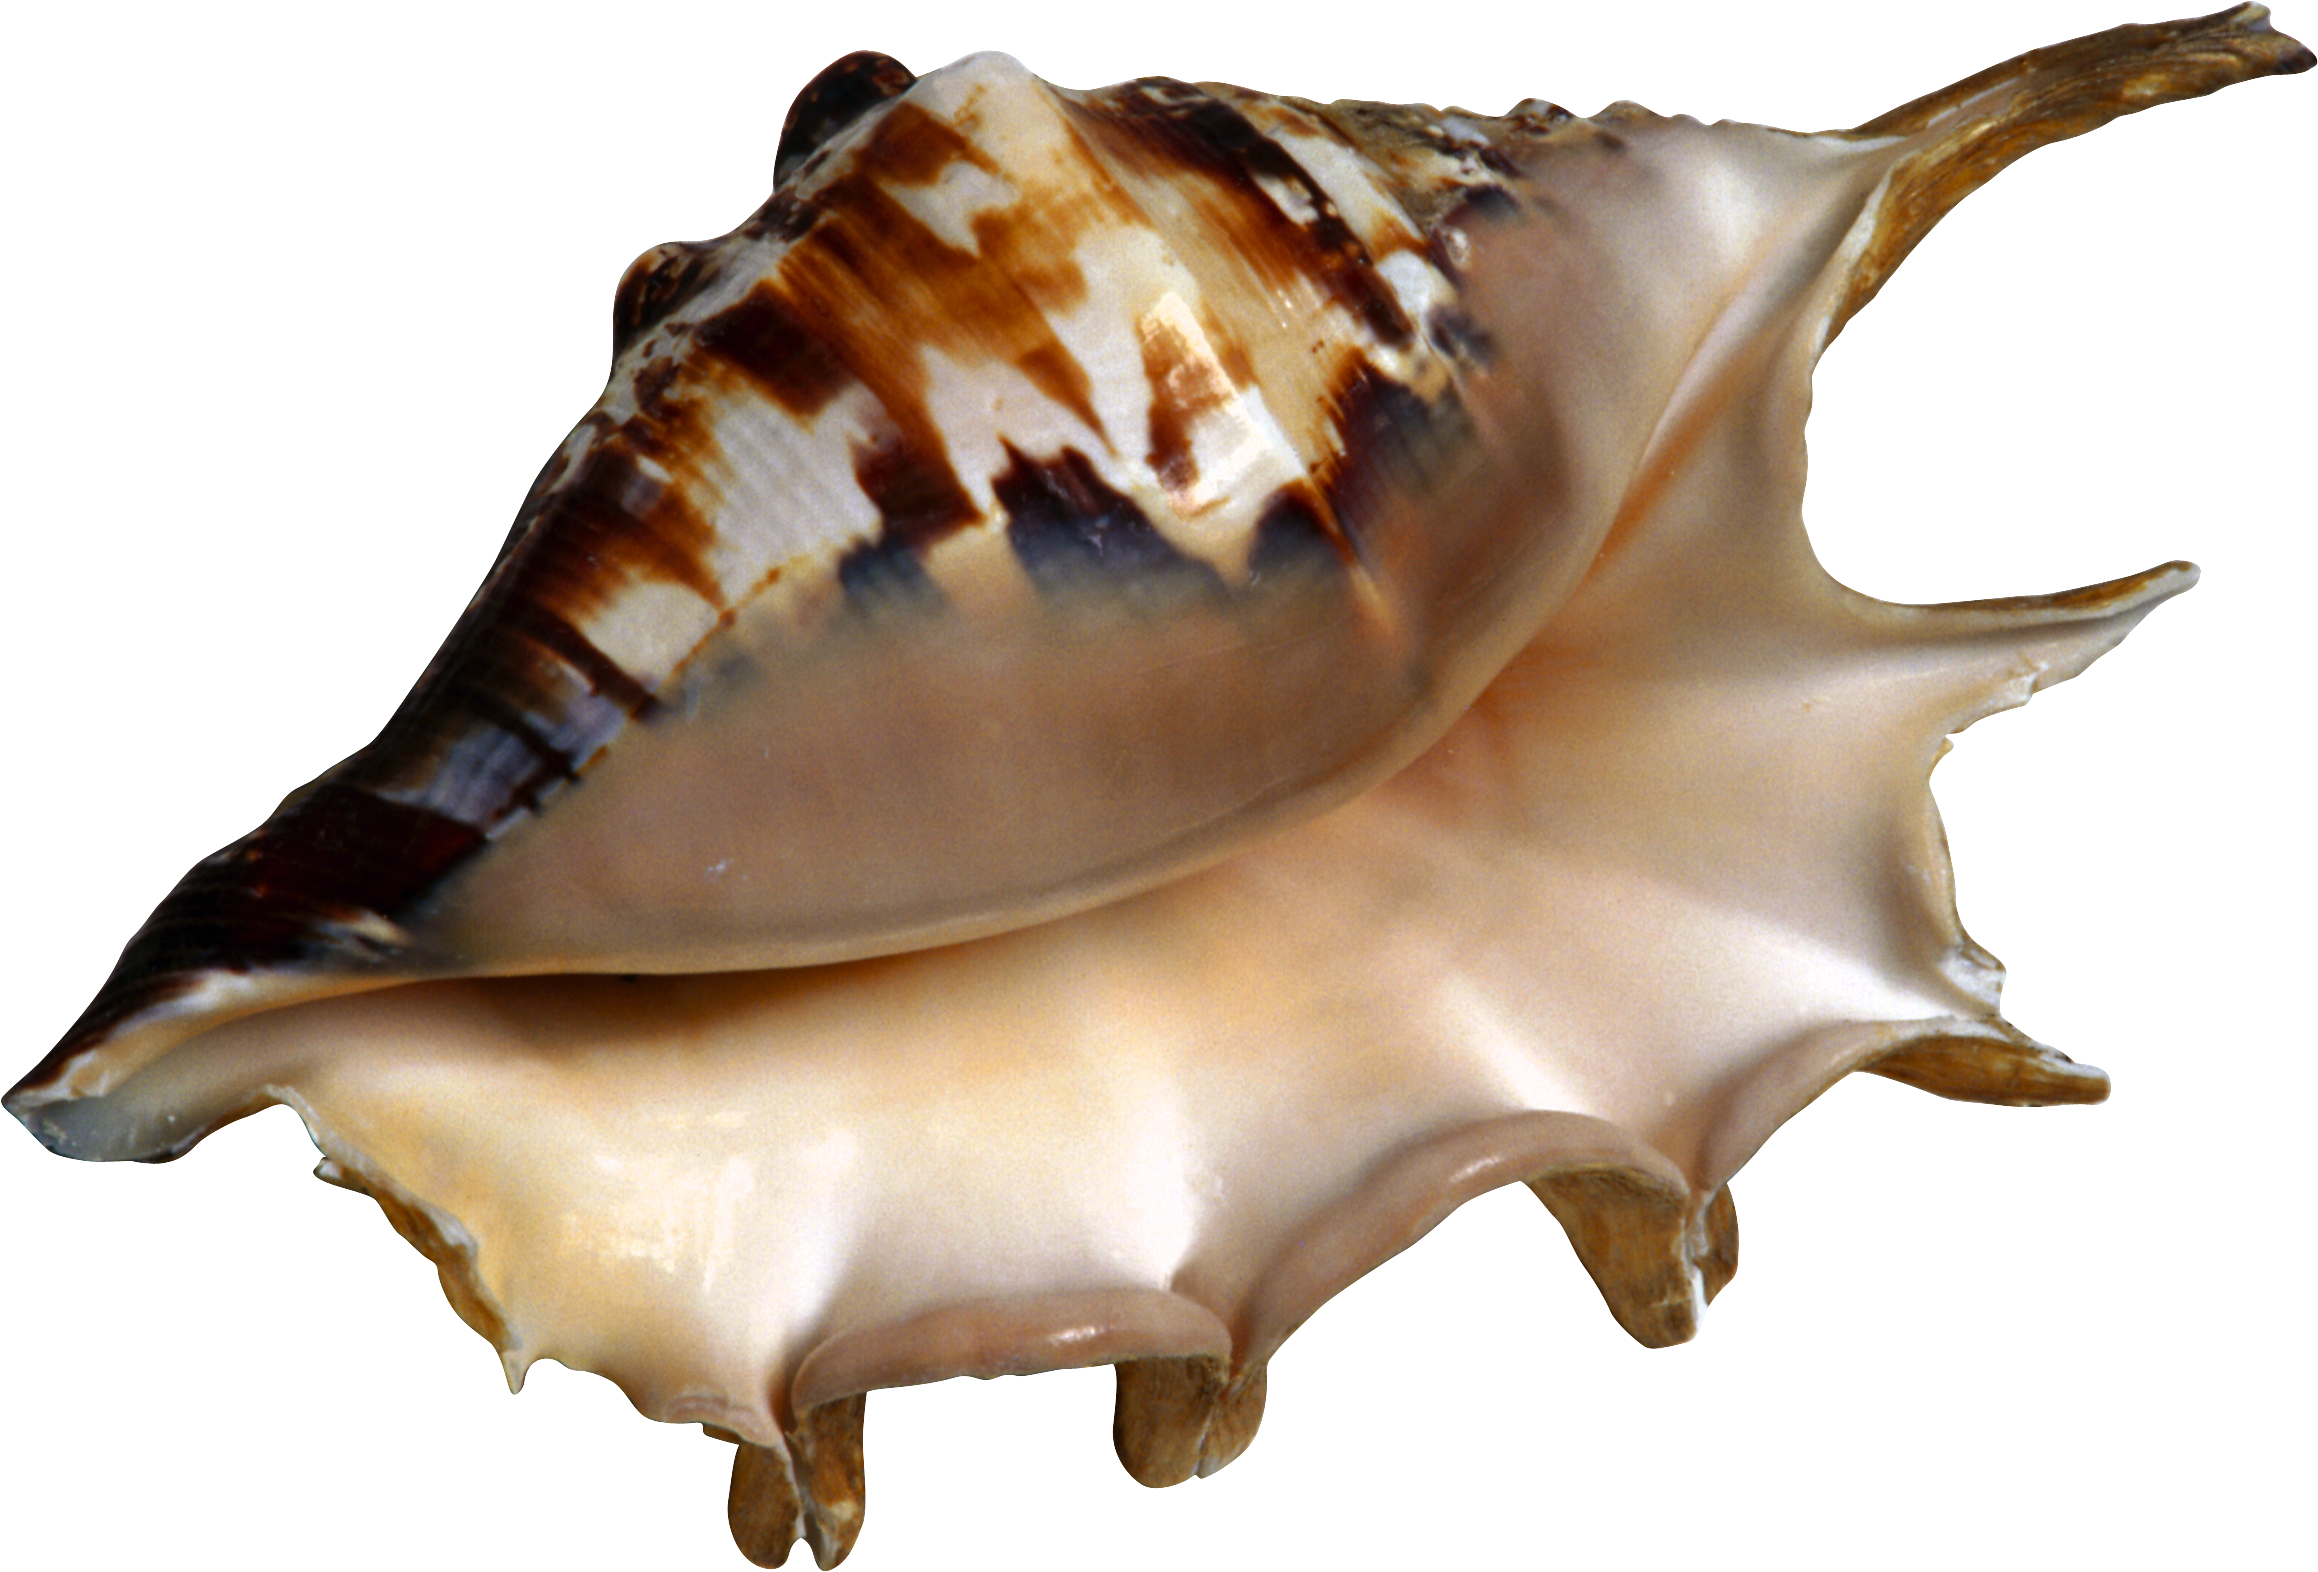 Conch Shell transparan gambars